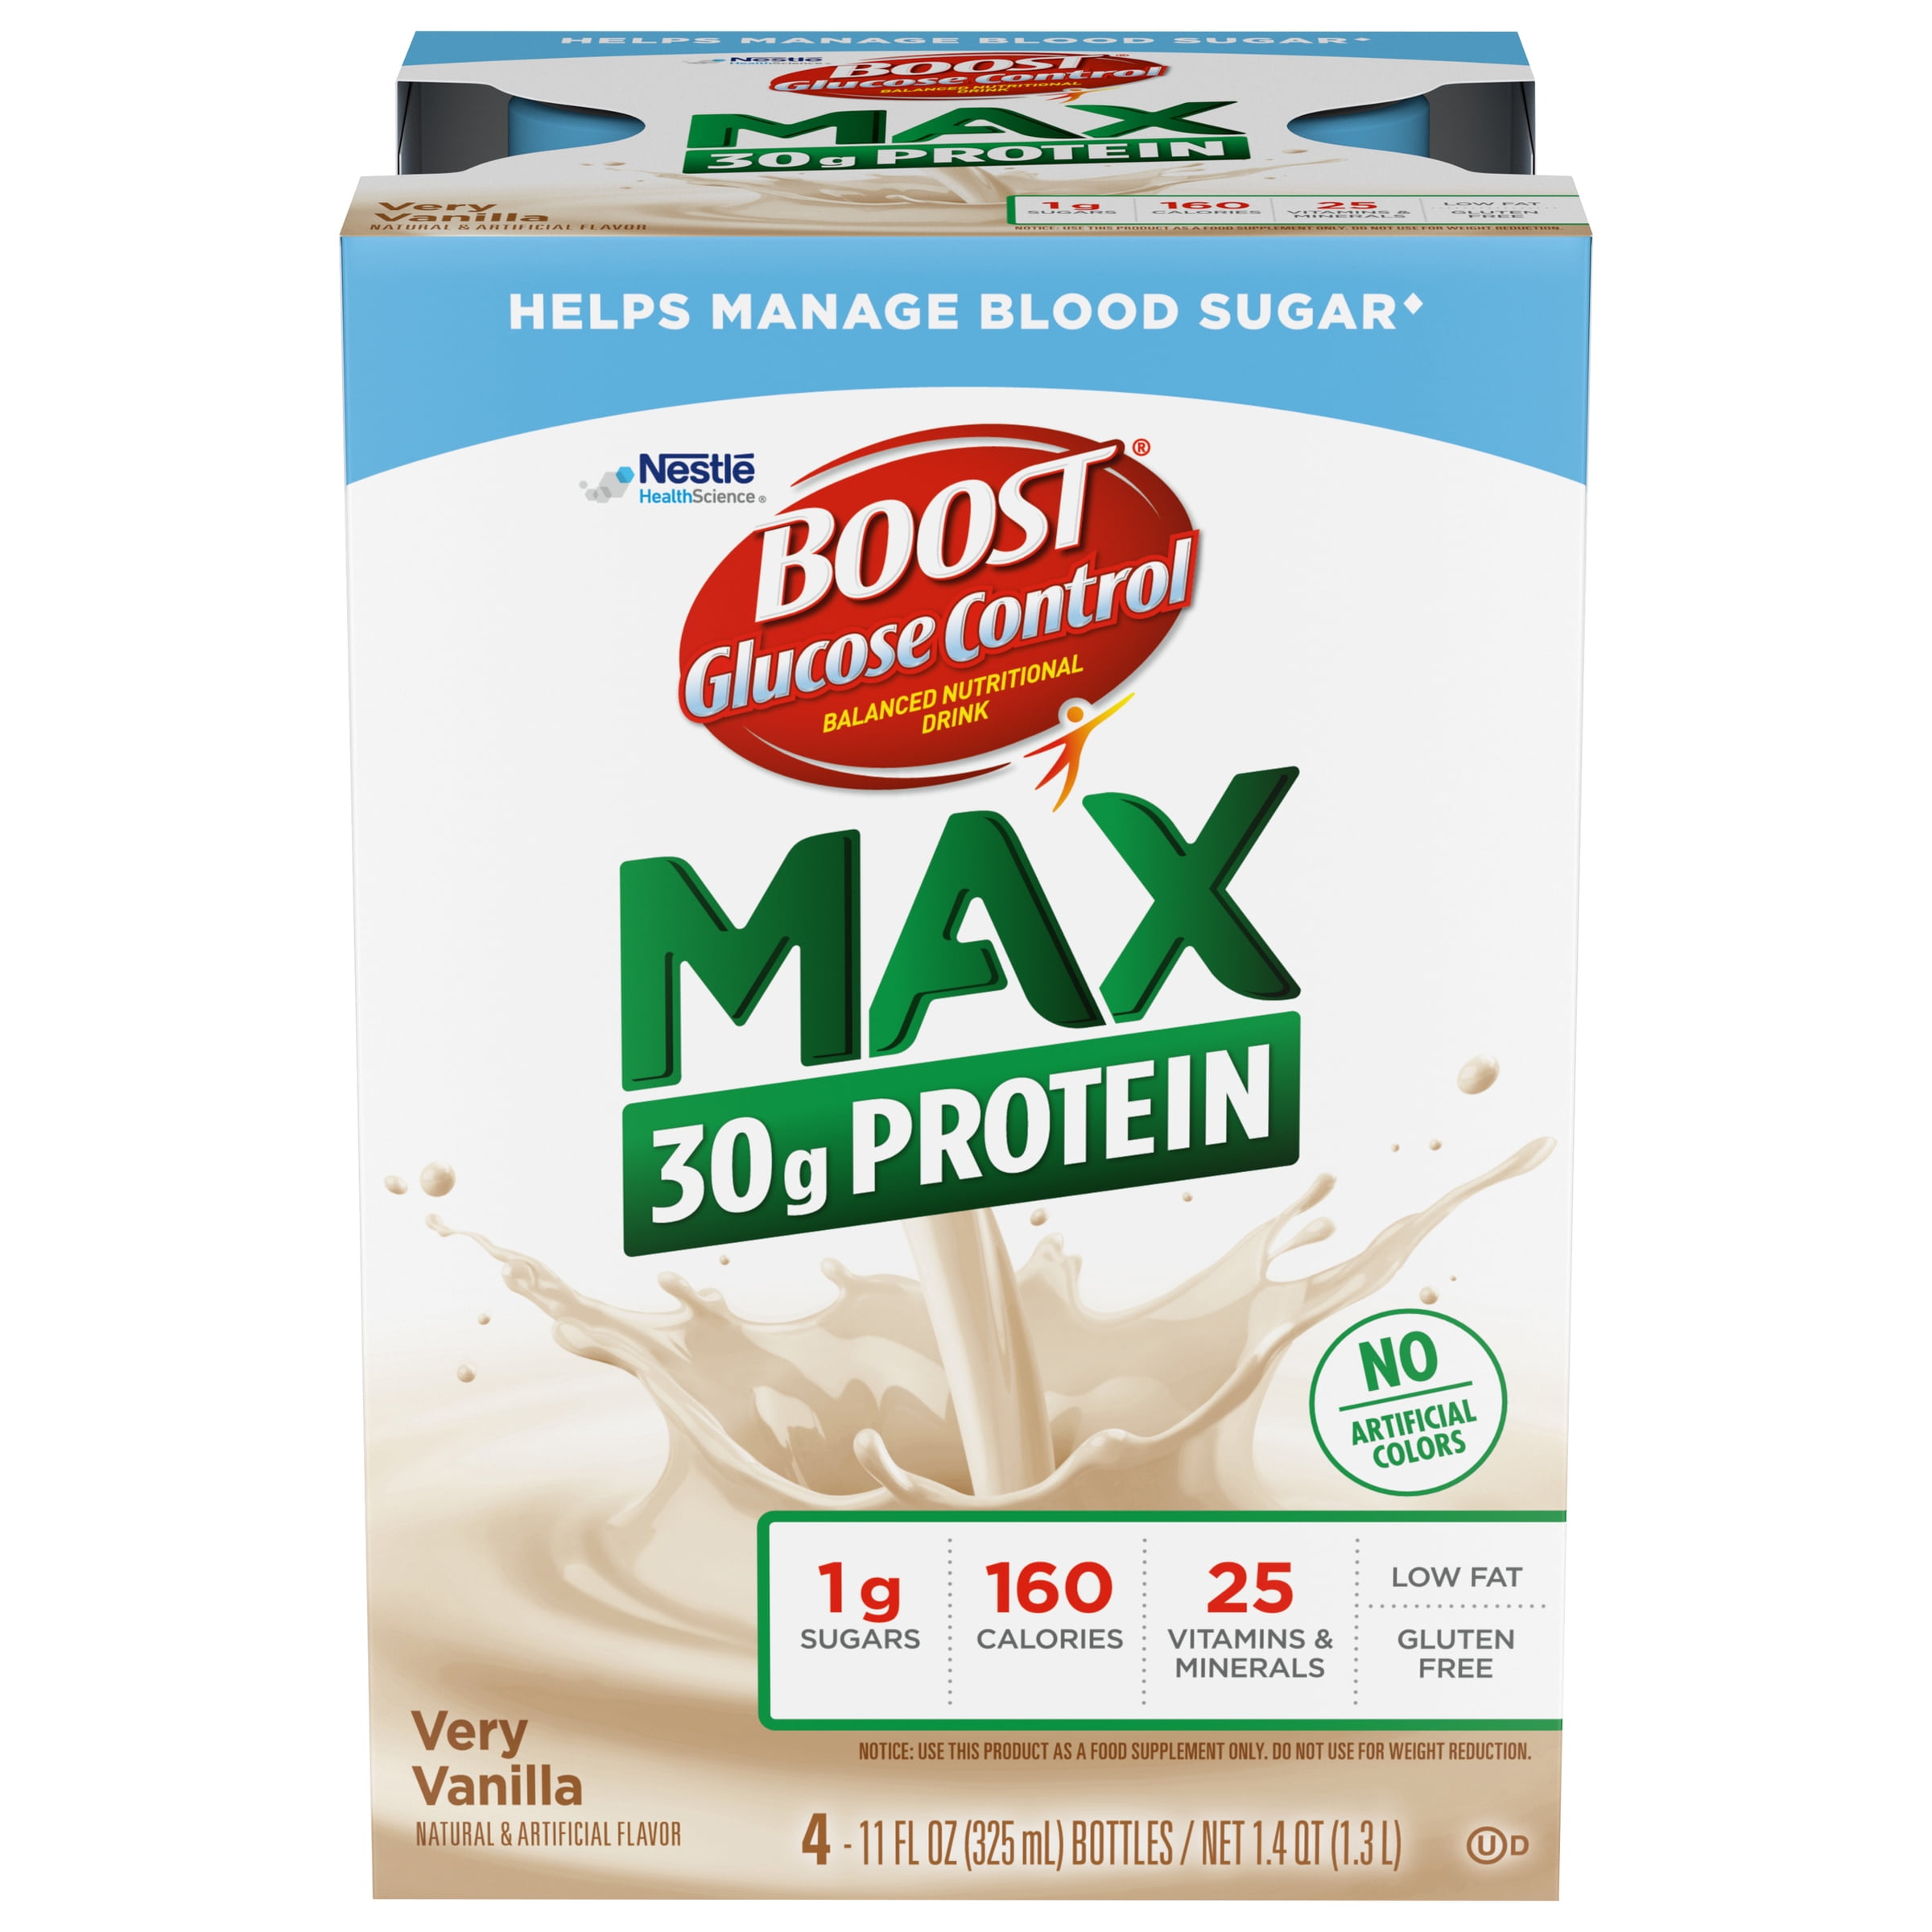 BOOST Glucose Control Max 30g Protein Nutritional Drink, Very Vanilla, 4 - 11 fl oz Bottles